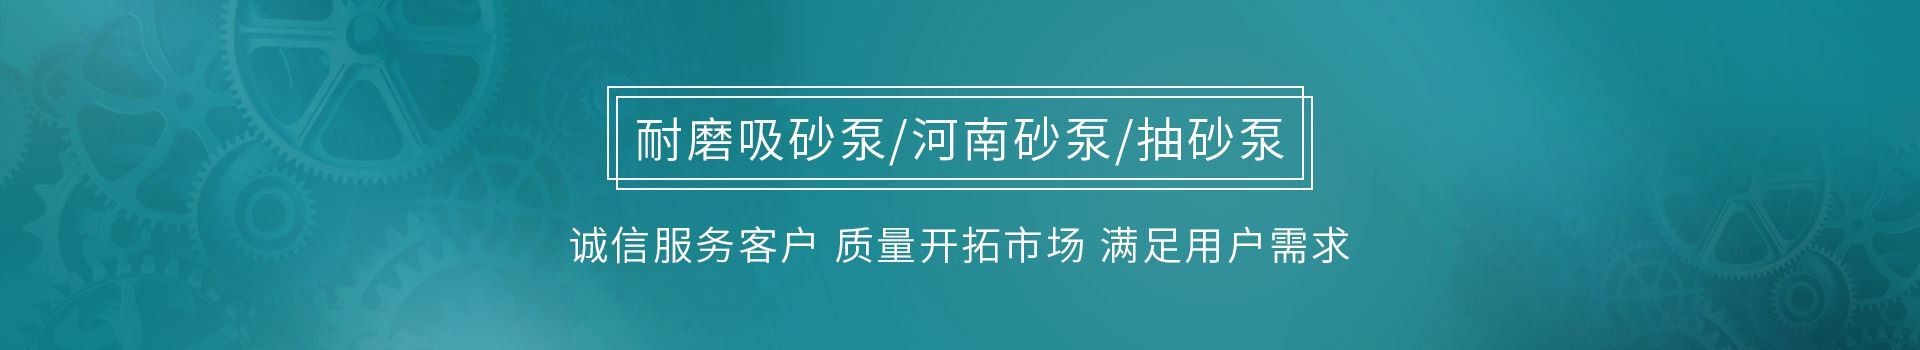 k8凯发(中国)app官方网站_image6810